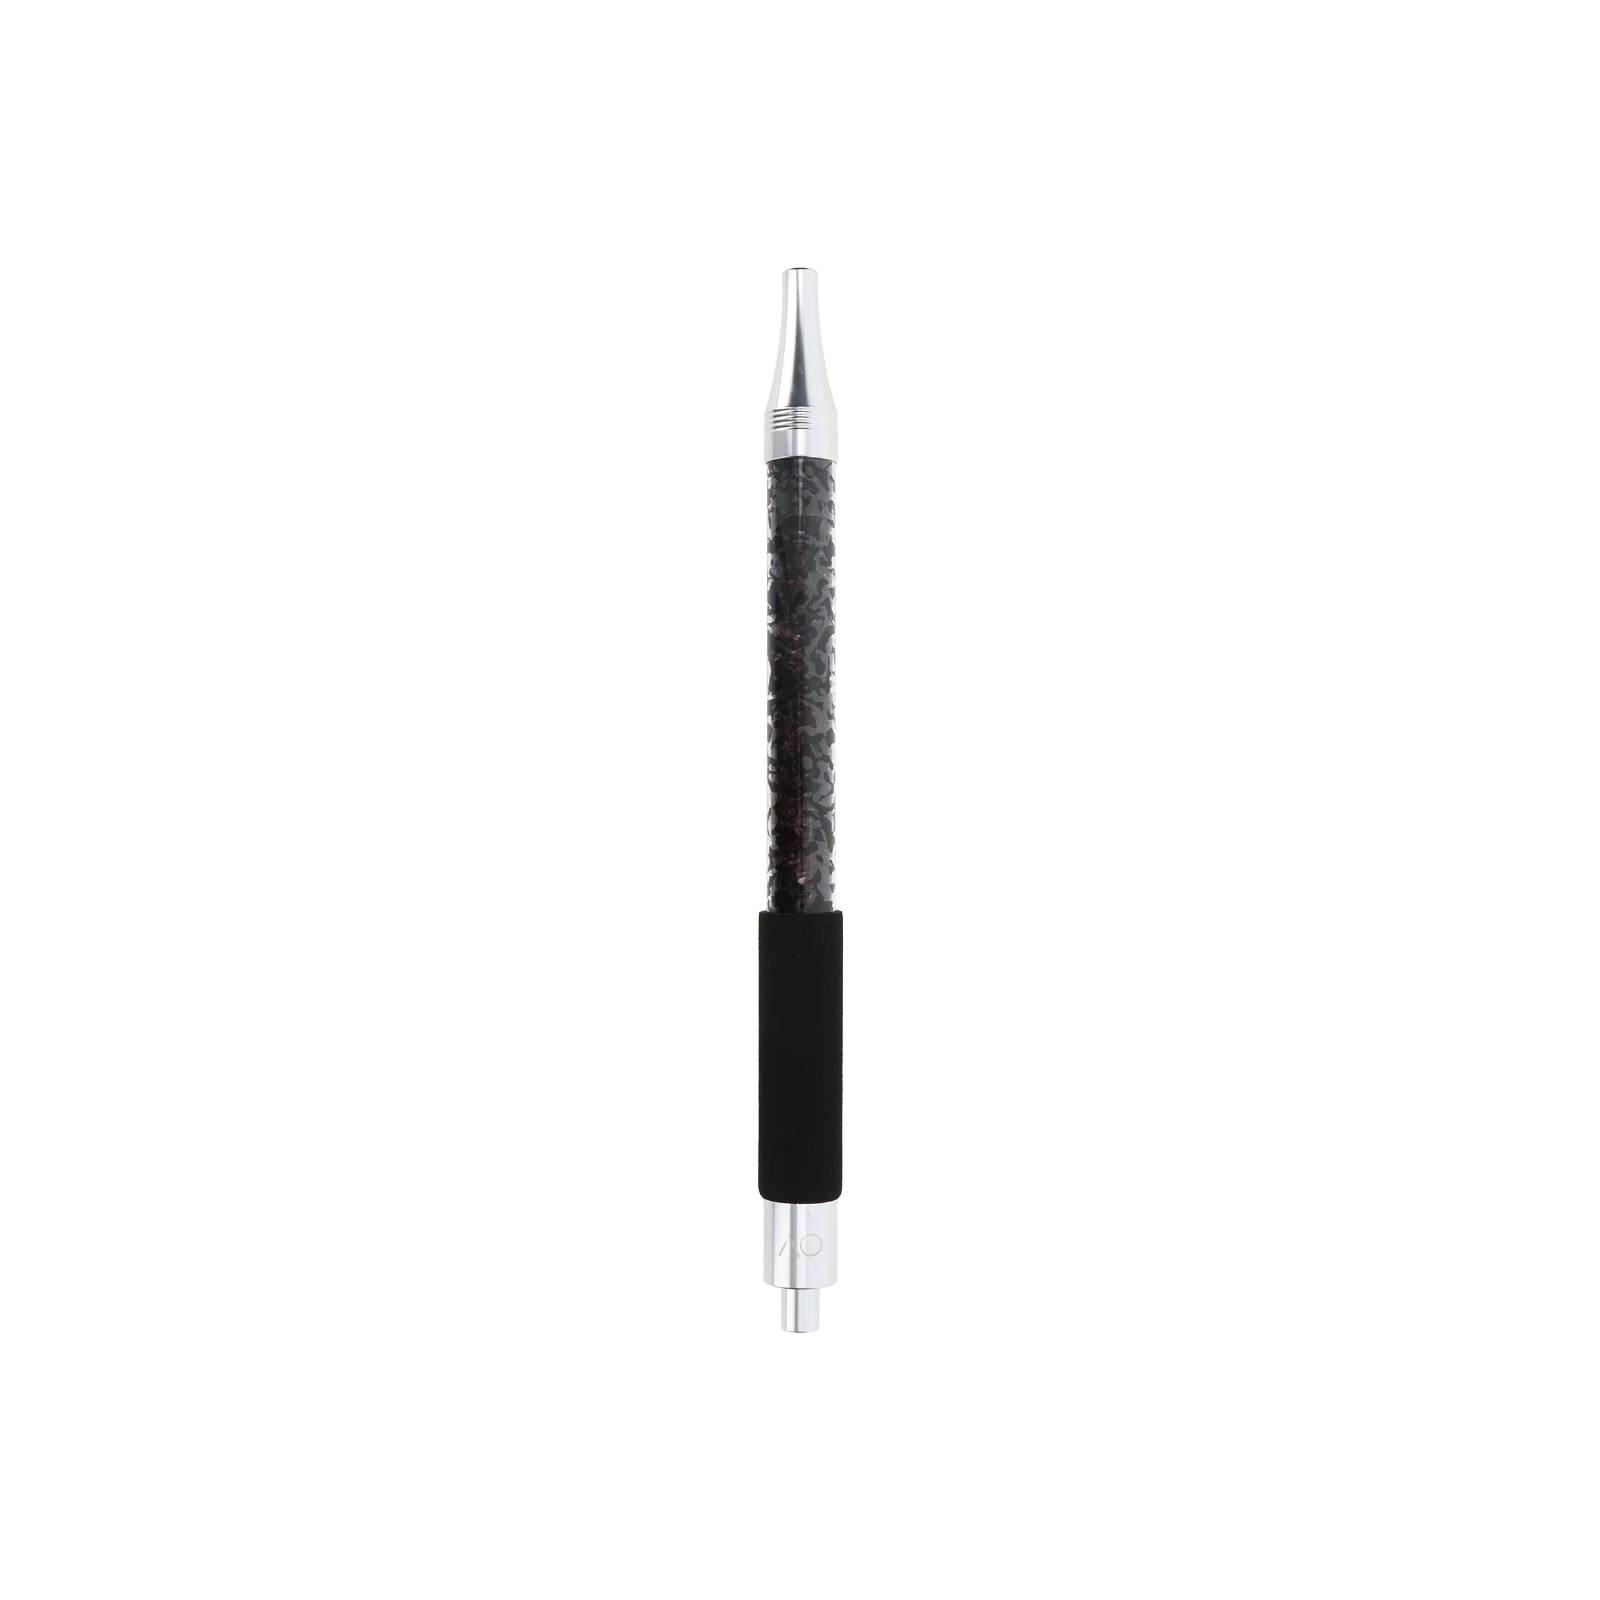 AO - ICE Stick - Eismundstück - 38.5 cm - Schwarz